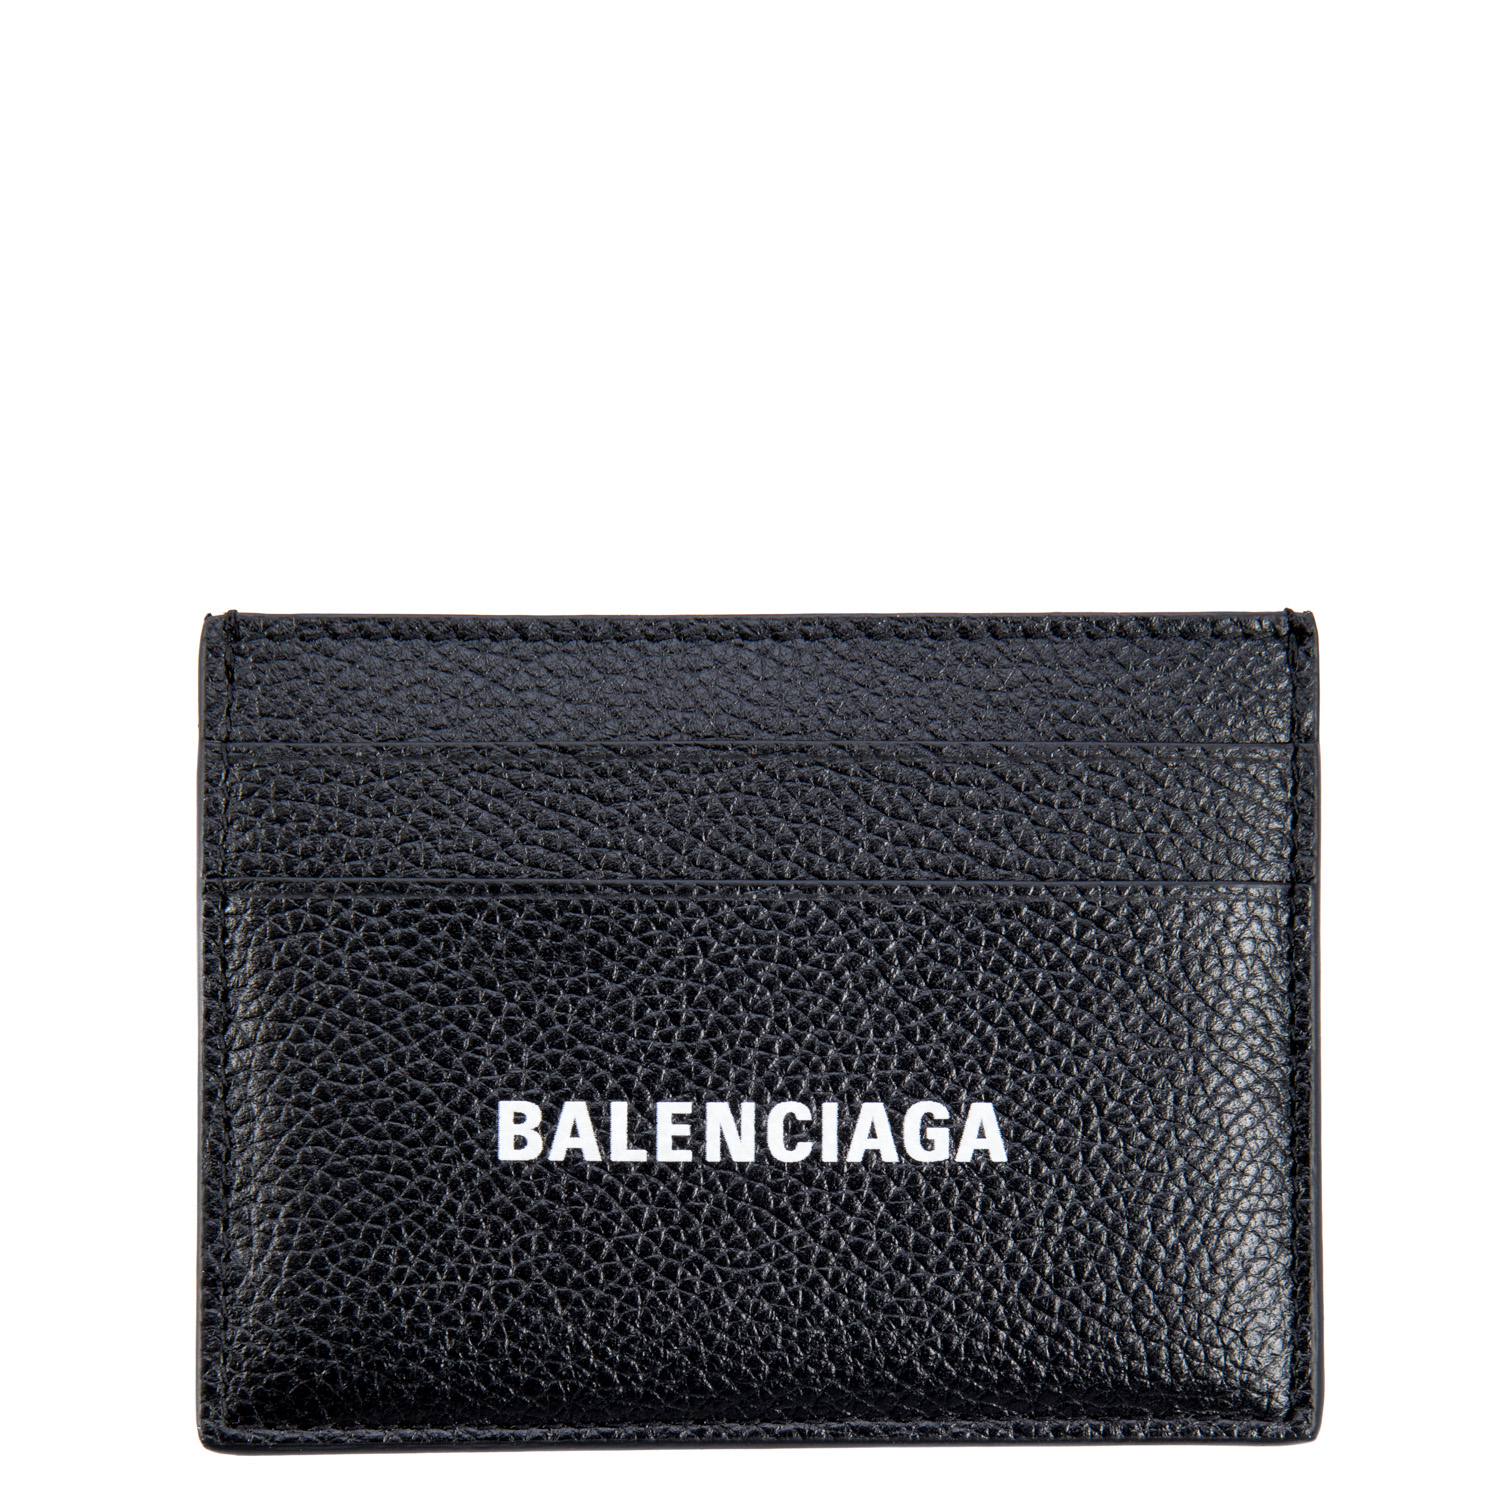 Balenciaga Credit Card Holder | Credomen